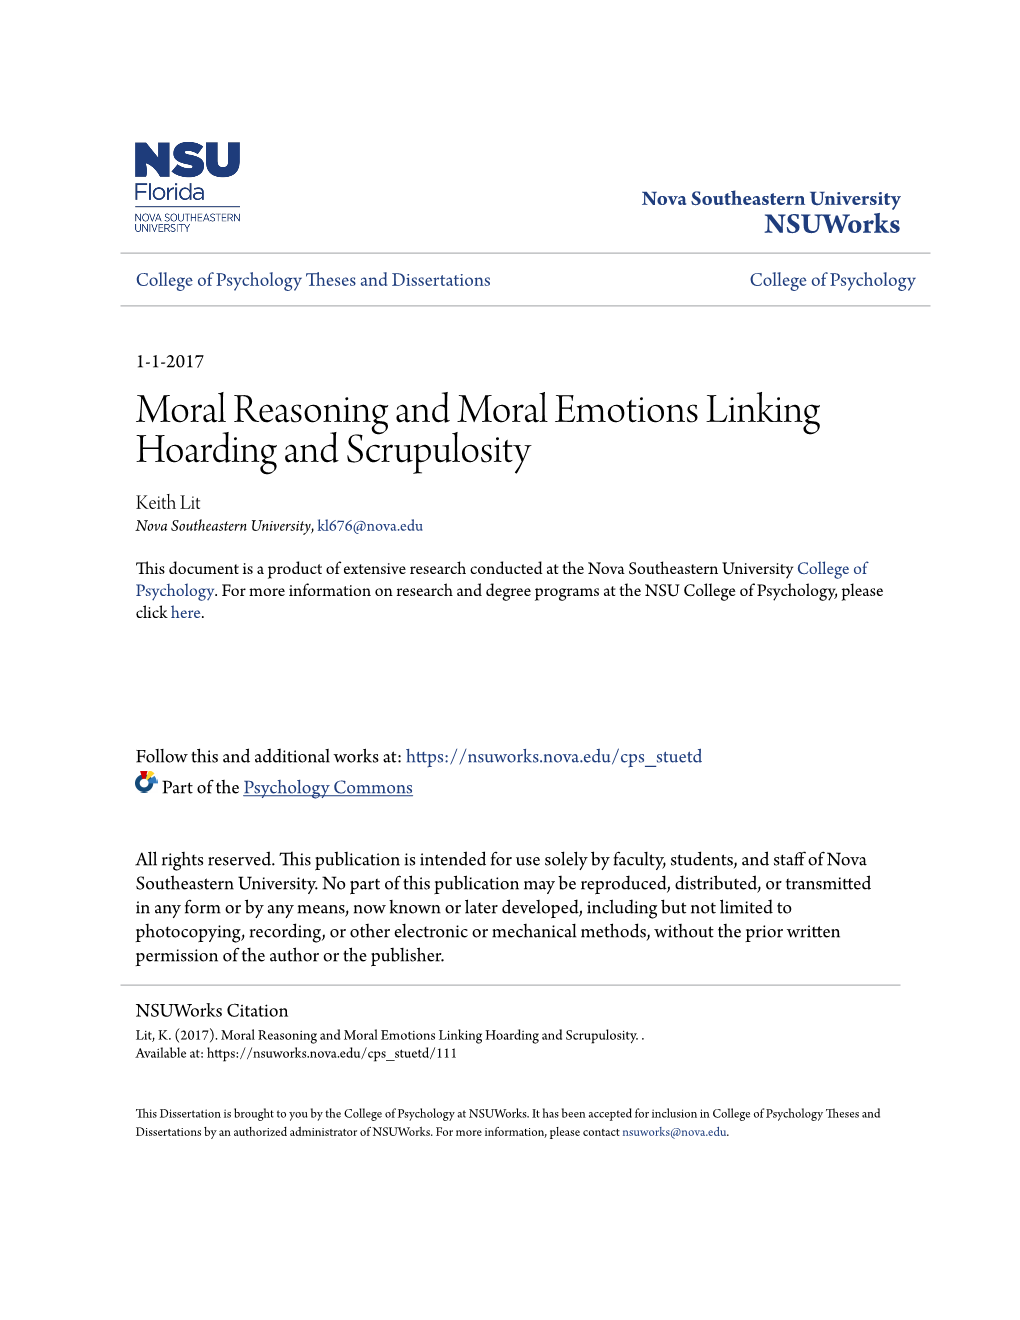 Moral Reasoning and Moral Emotions Linking Hoarding and Scrupulosity Keith Lit Nova Southeastern University, Kl676@Nova.Edu